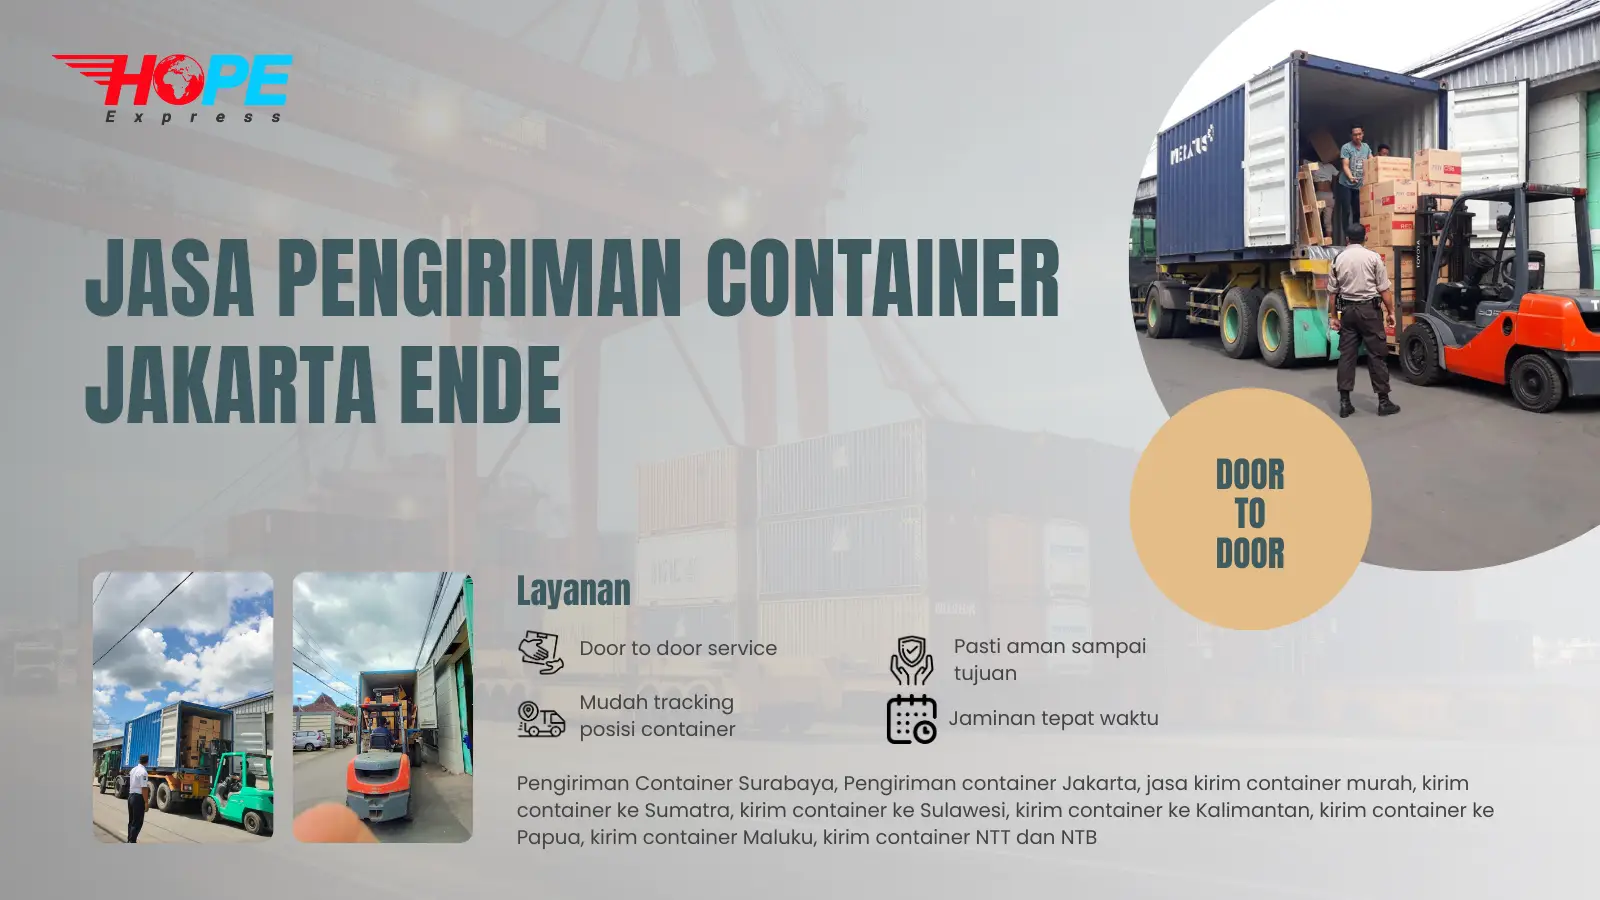 Jasa Pengiriman Container Jakarta Ende